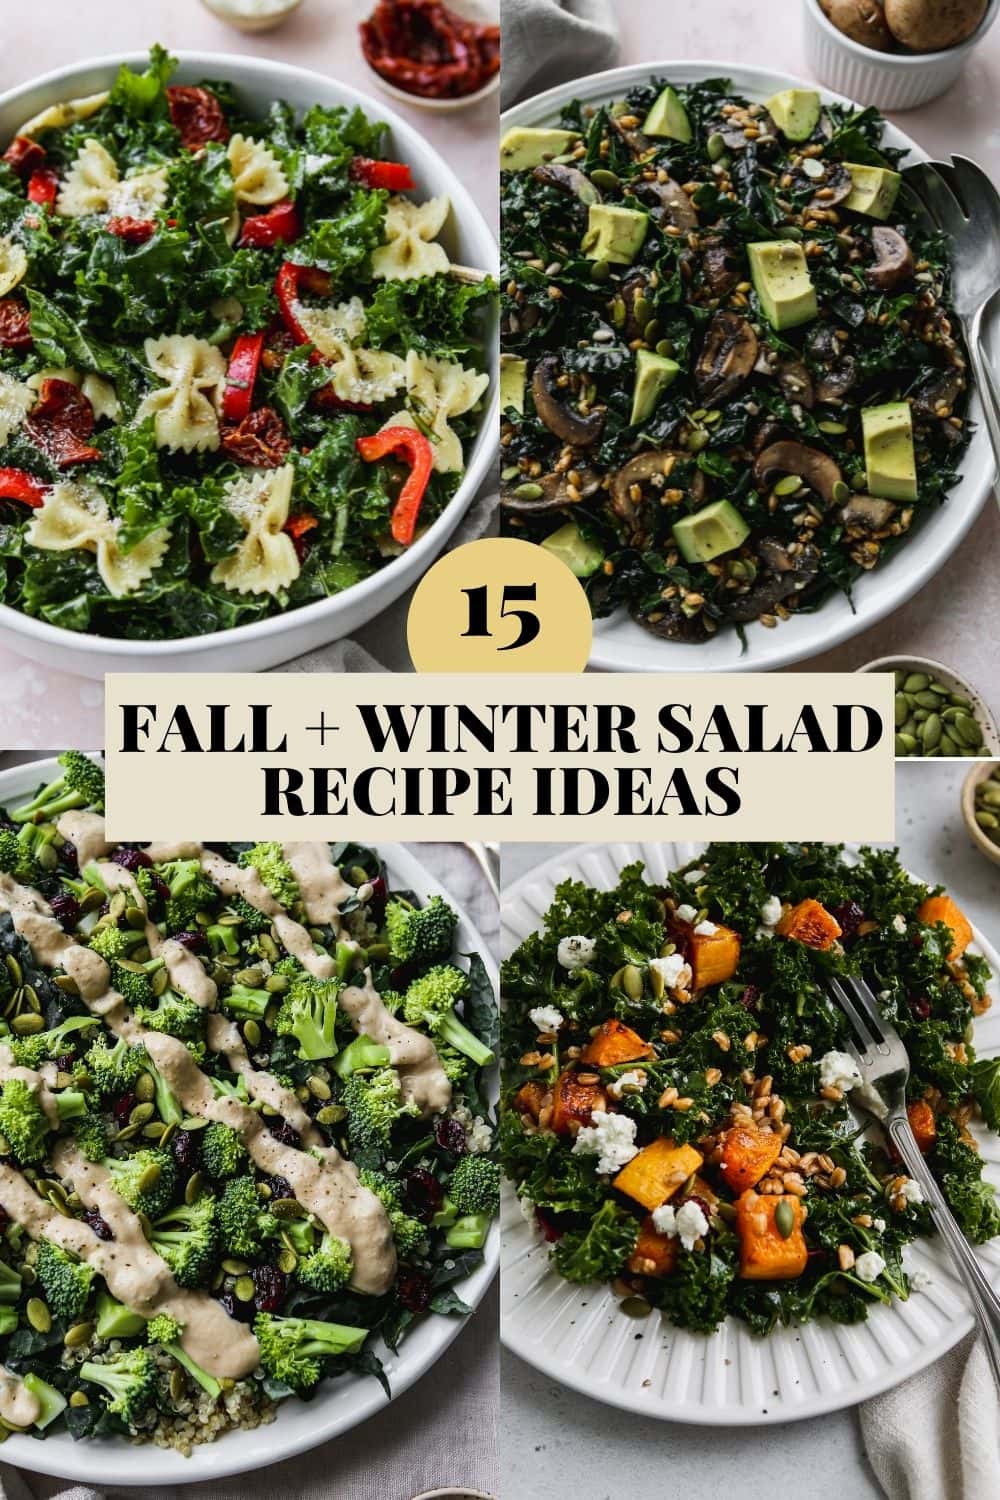 https://www.walderwellness.com/wp-content/uploads/2021/10/Fall-Winter-Salad-Recipe-Ideas-Walder-Wellness-1.jpg